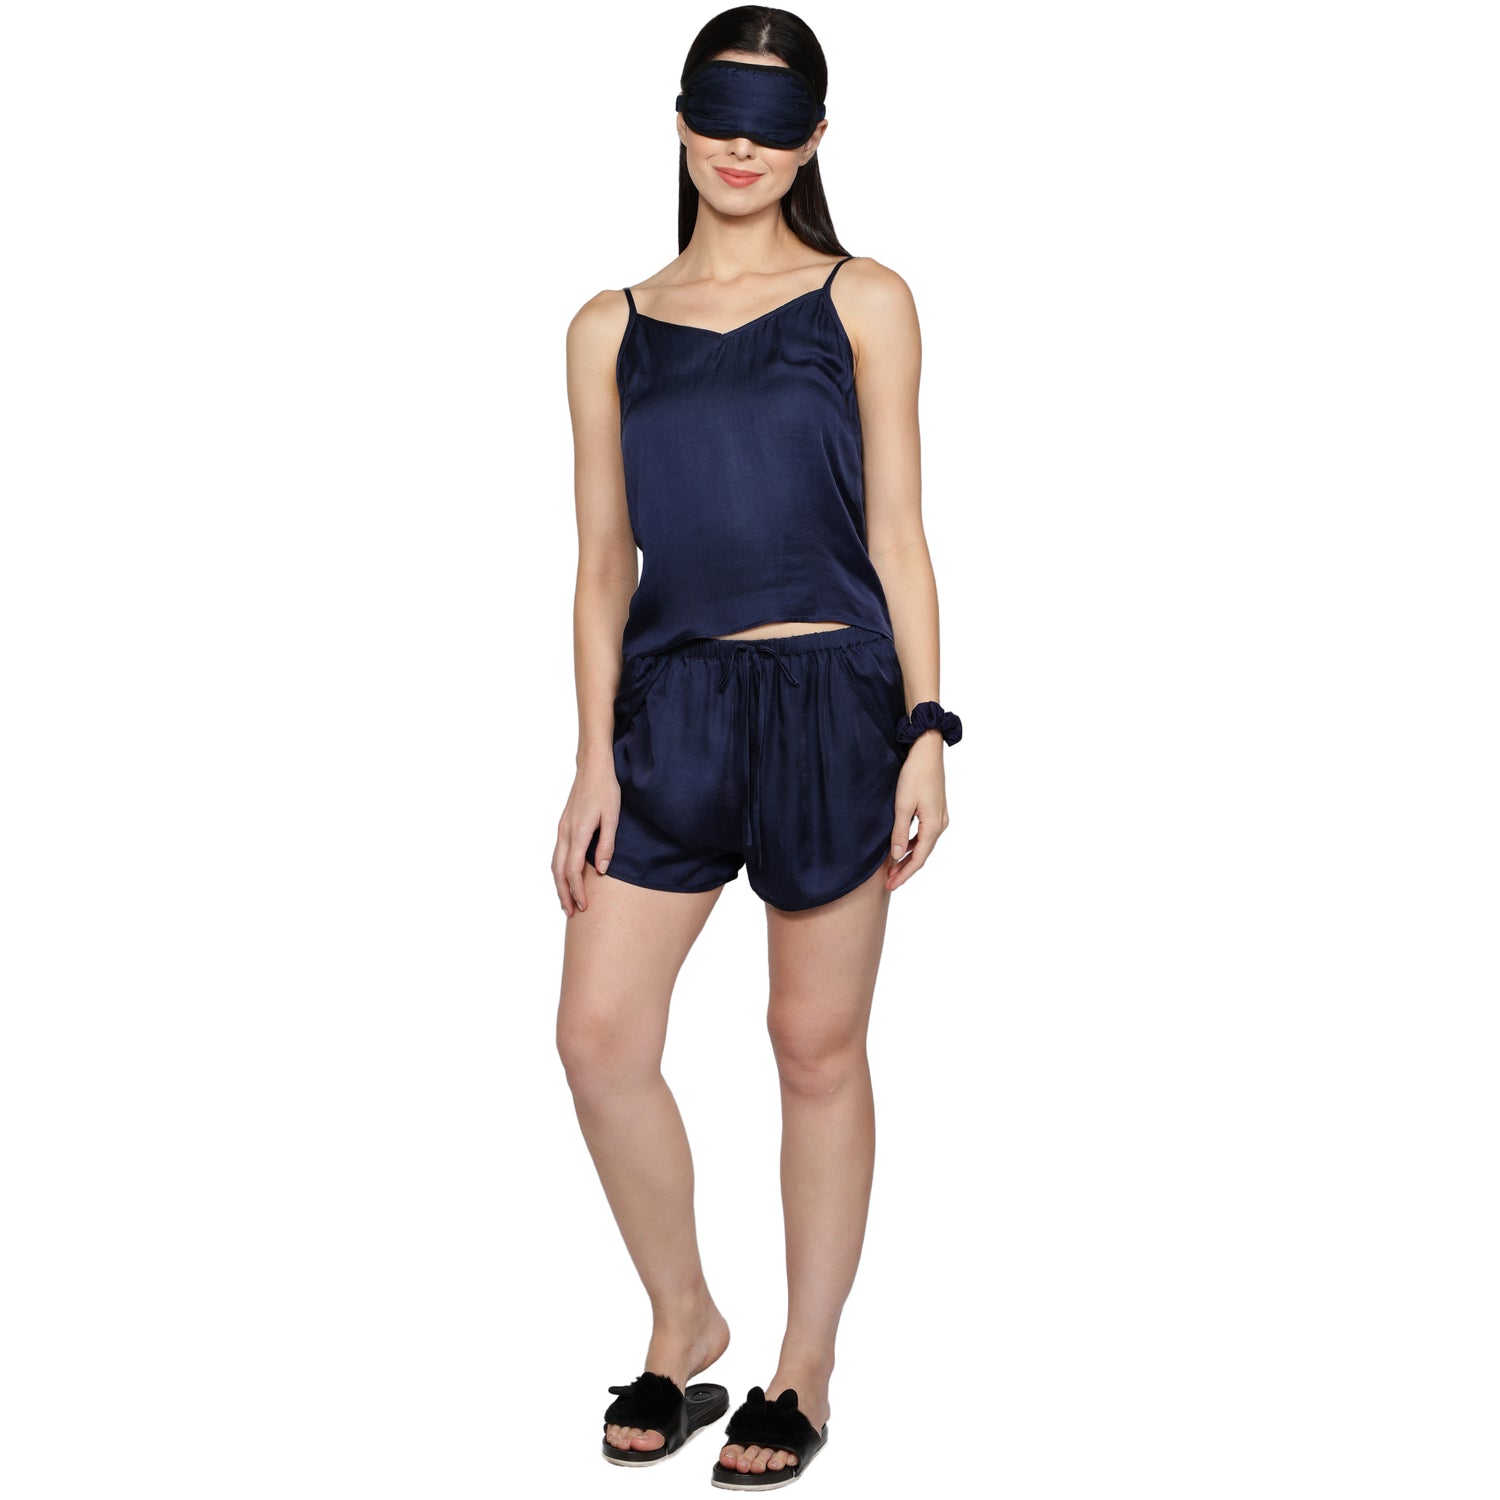 SLAY. Women's Night Blue Color Sleepwear Camisole & Short Coord Set with matching Eye mask & Ruffle-clothing-to-slay.myshopify.com-Nightwear Dress